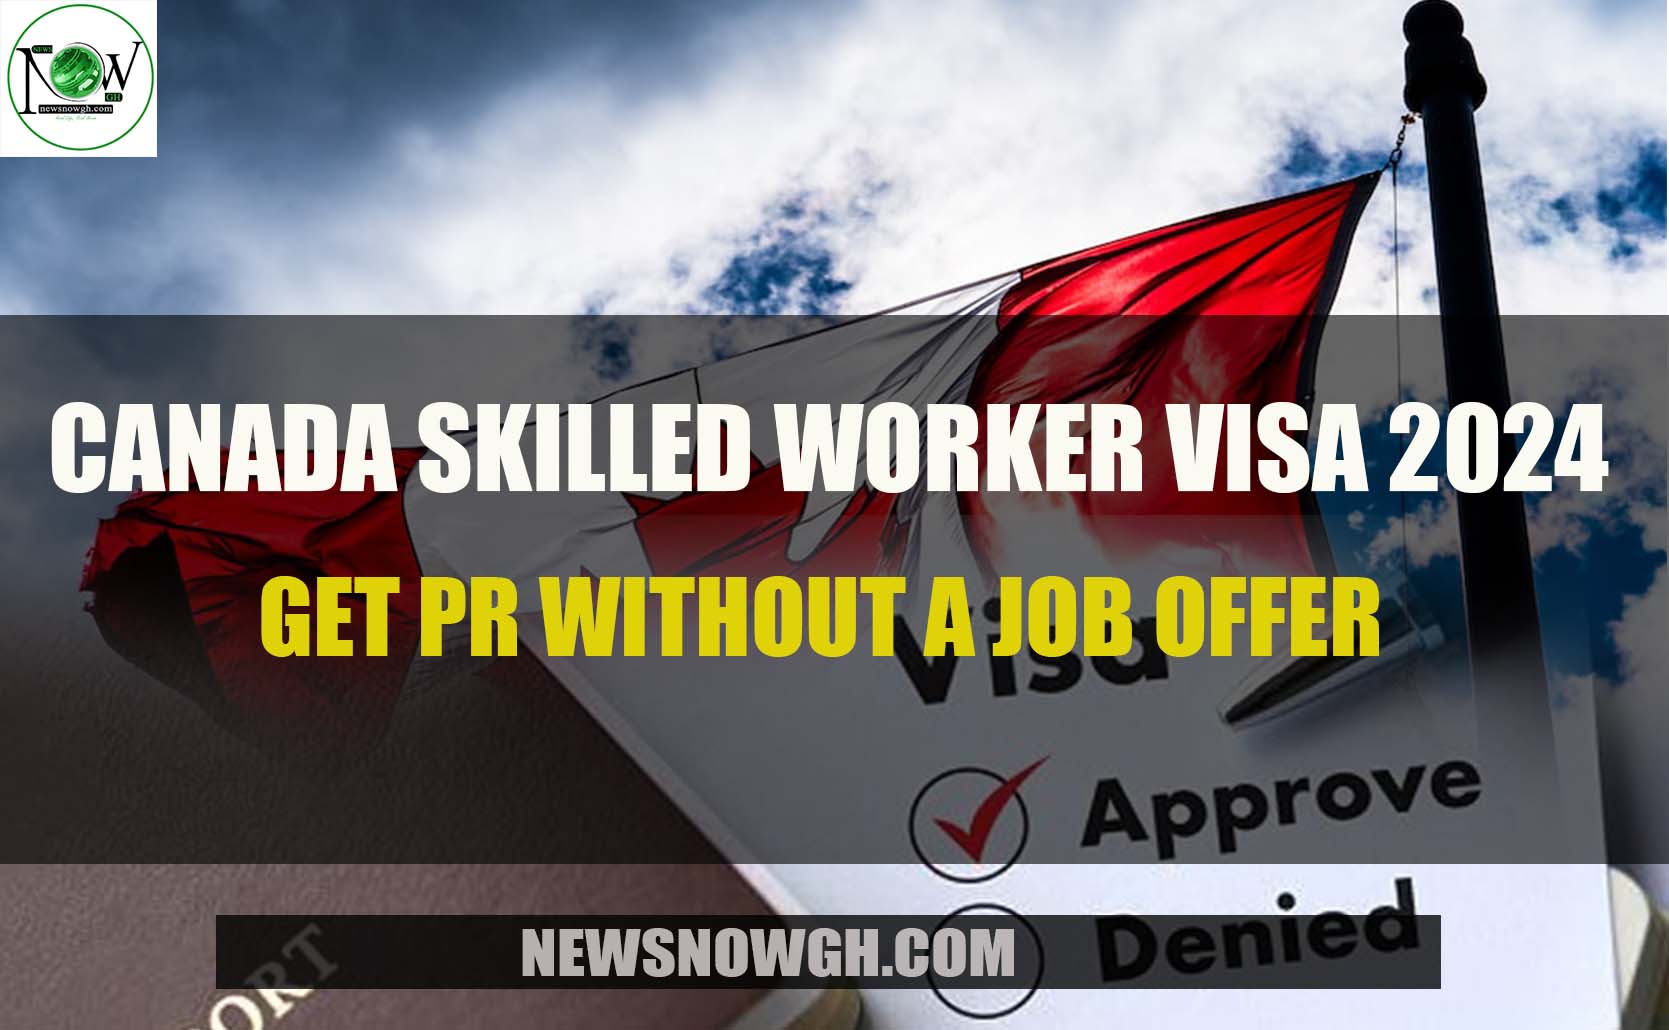 Canada Skilled Worker Visa 2024 Get PR Without a Job Offer